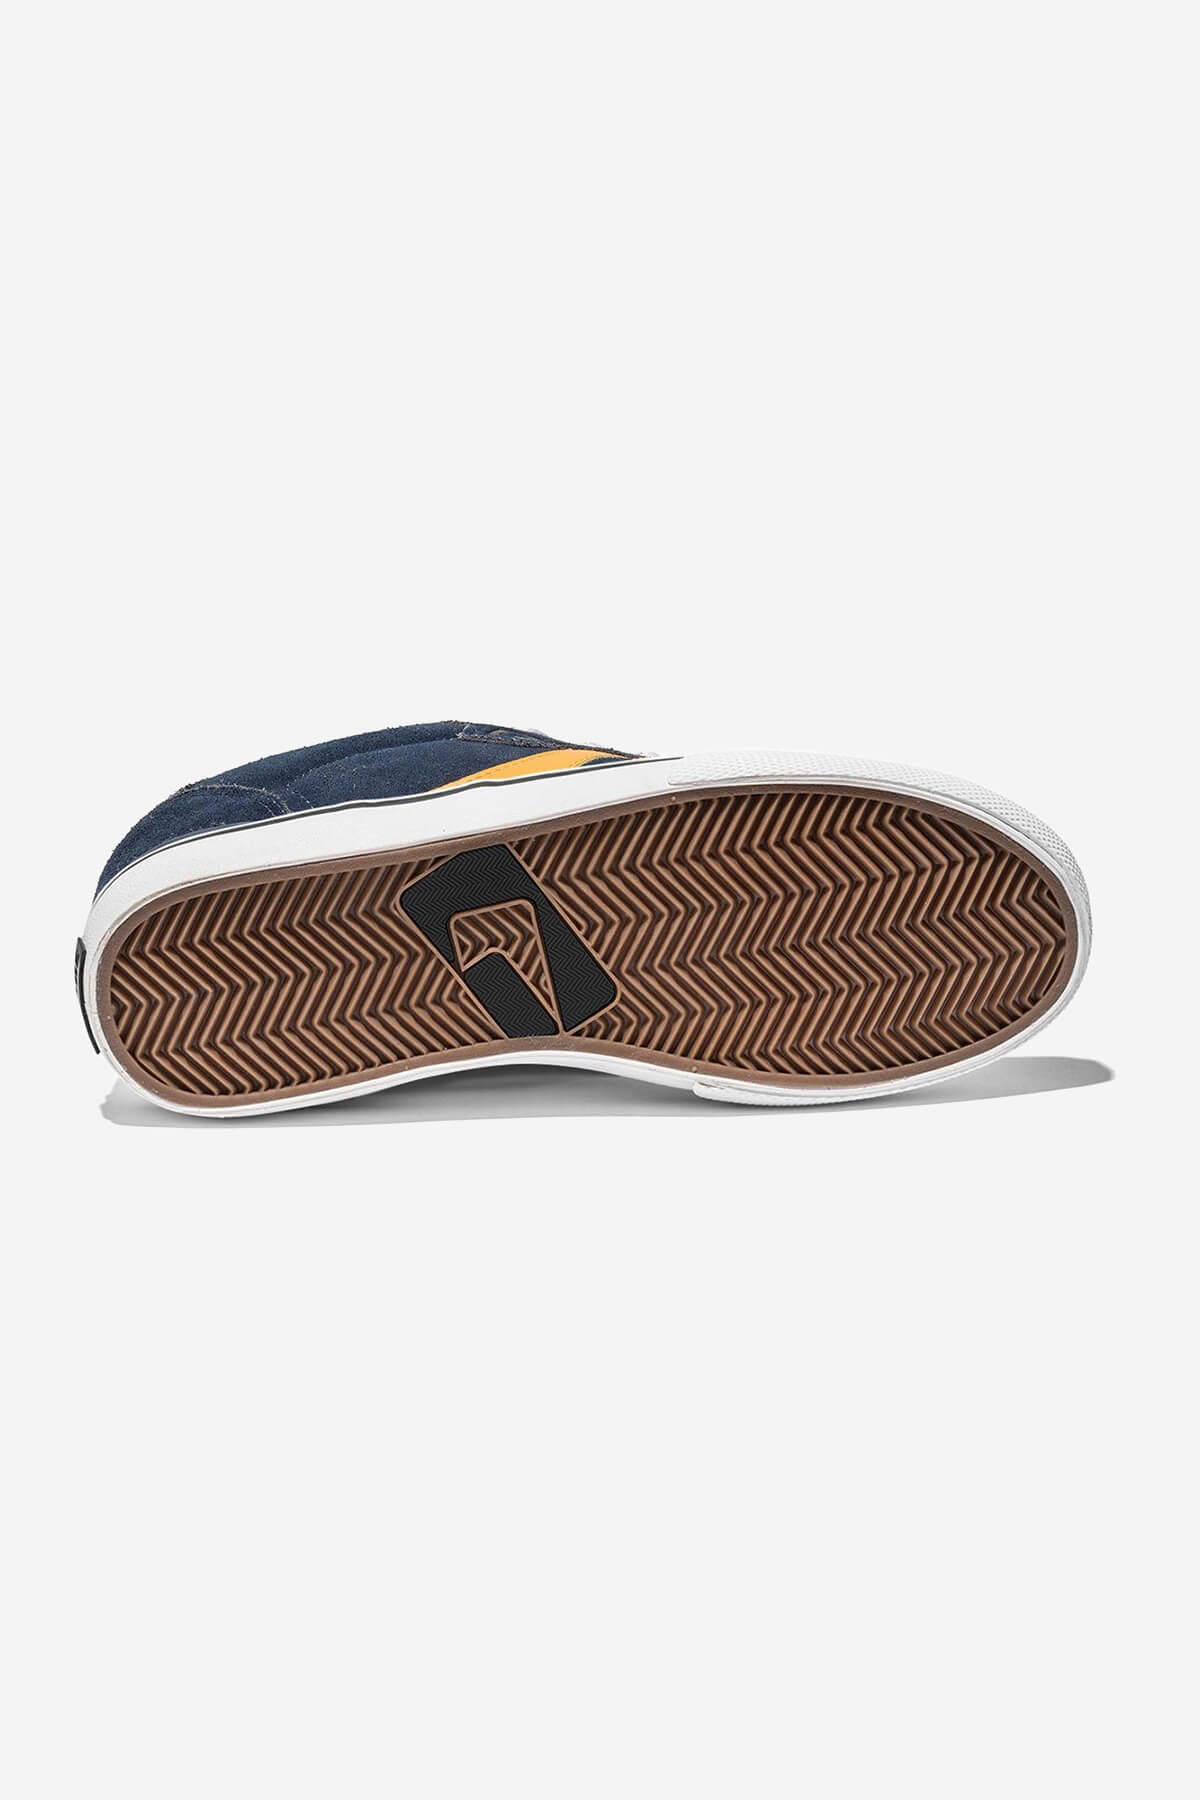 Globe - Encore 2 - Navy/Yellow - skateboard Schuhe